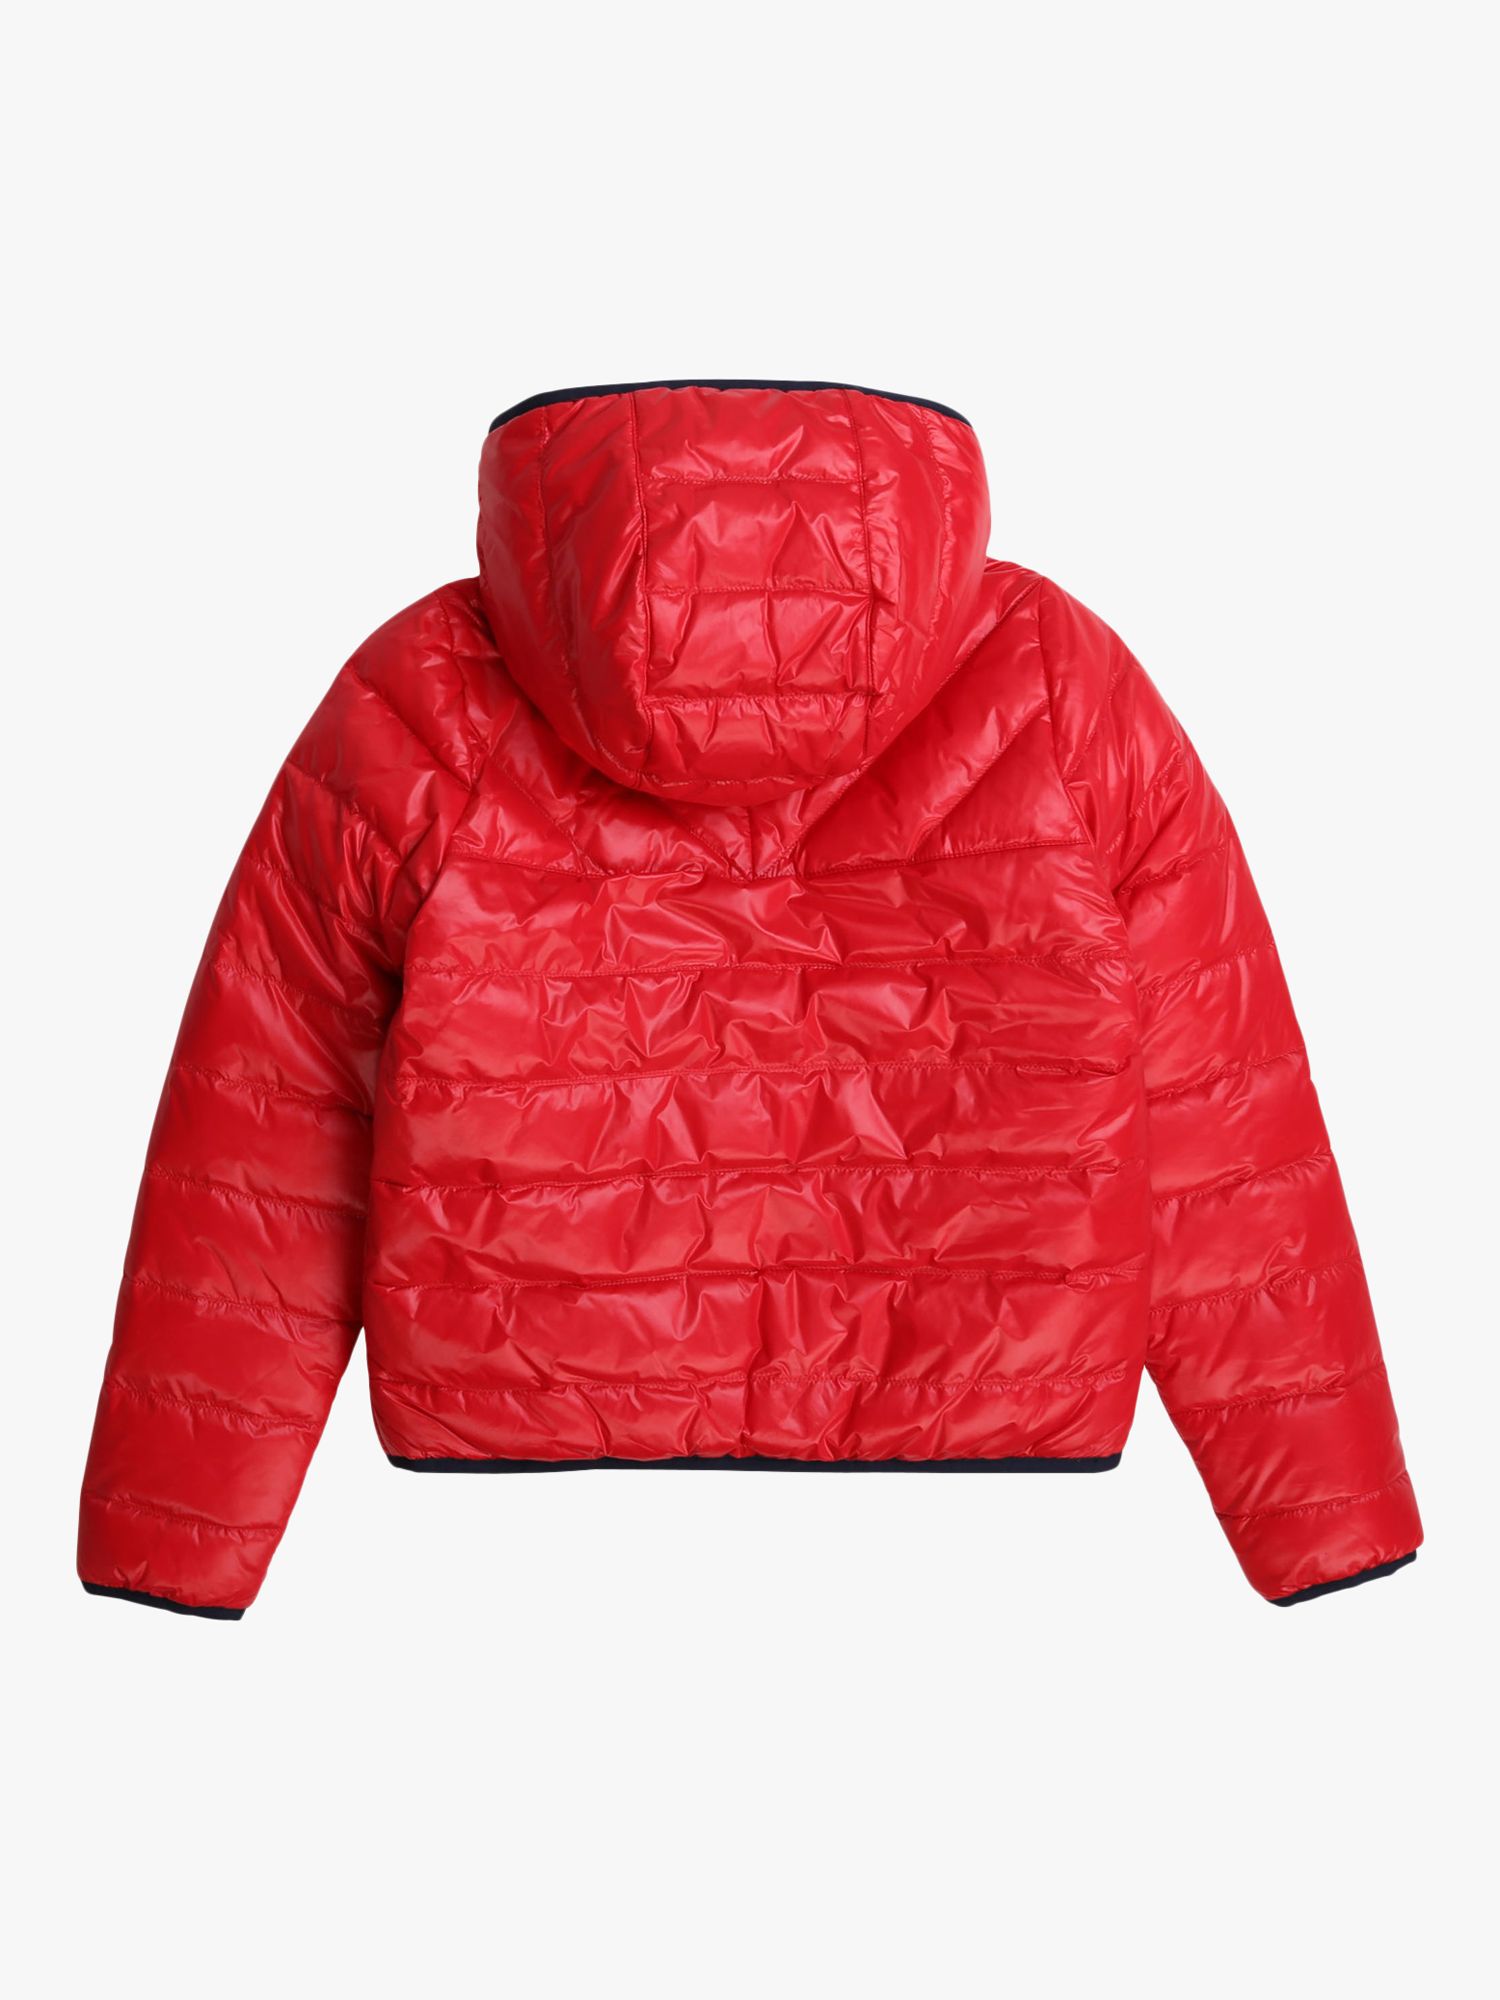 HUGO BOSS Boys' Reversible Puffer Jacket, Red/Navy at John Lewis & Partners